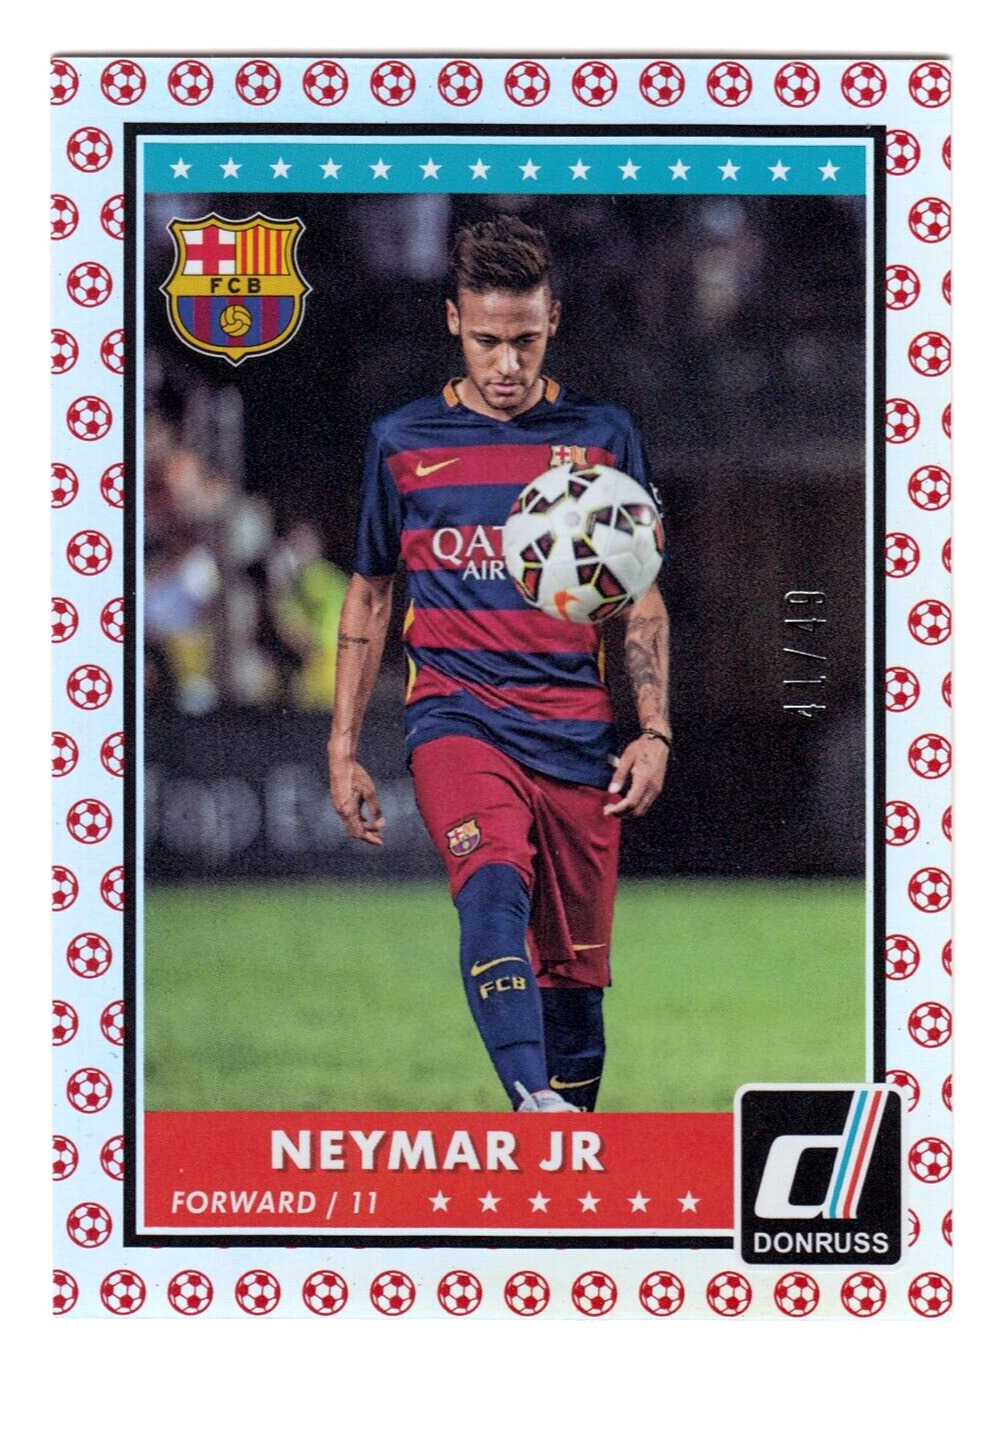 2015 Panini Donruss Soccer Neymar Jr. Red Ball FC Barcelona SP /49 #69 Refractor